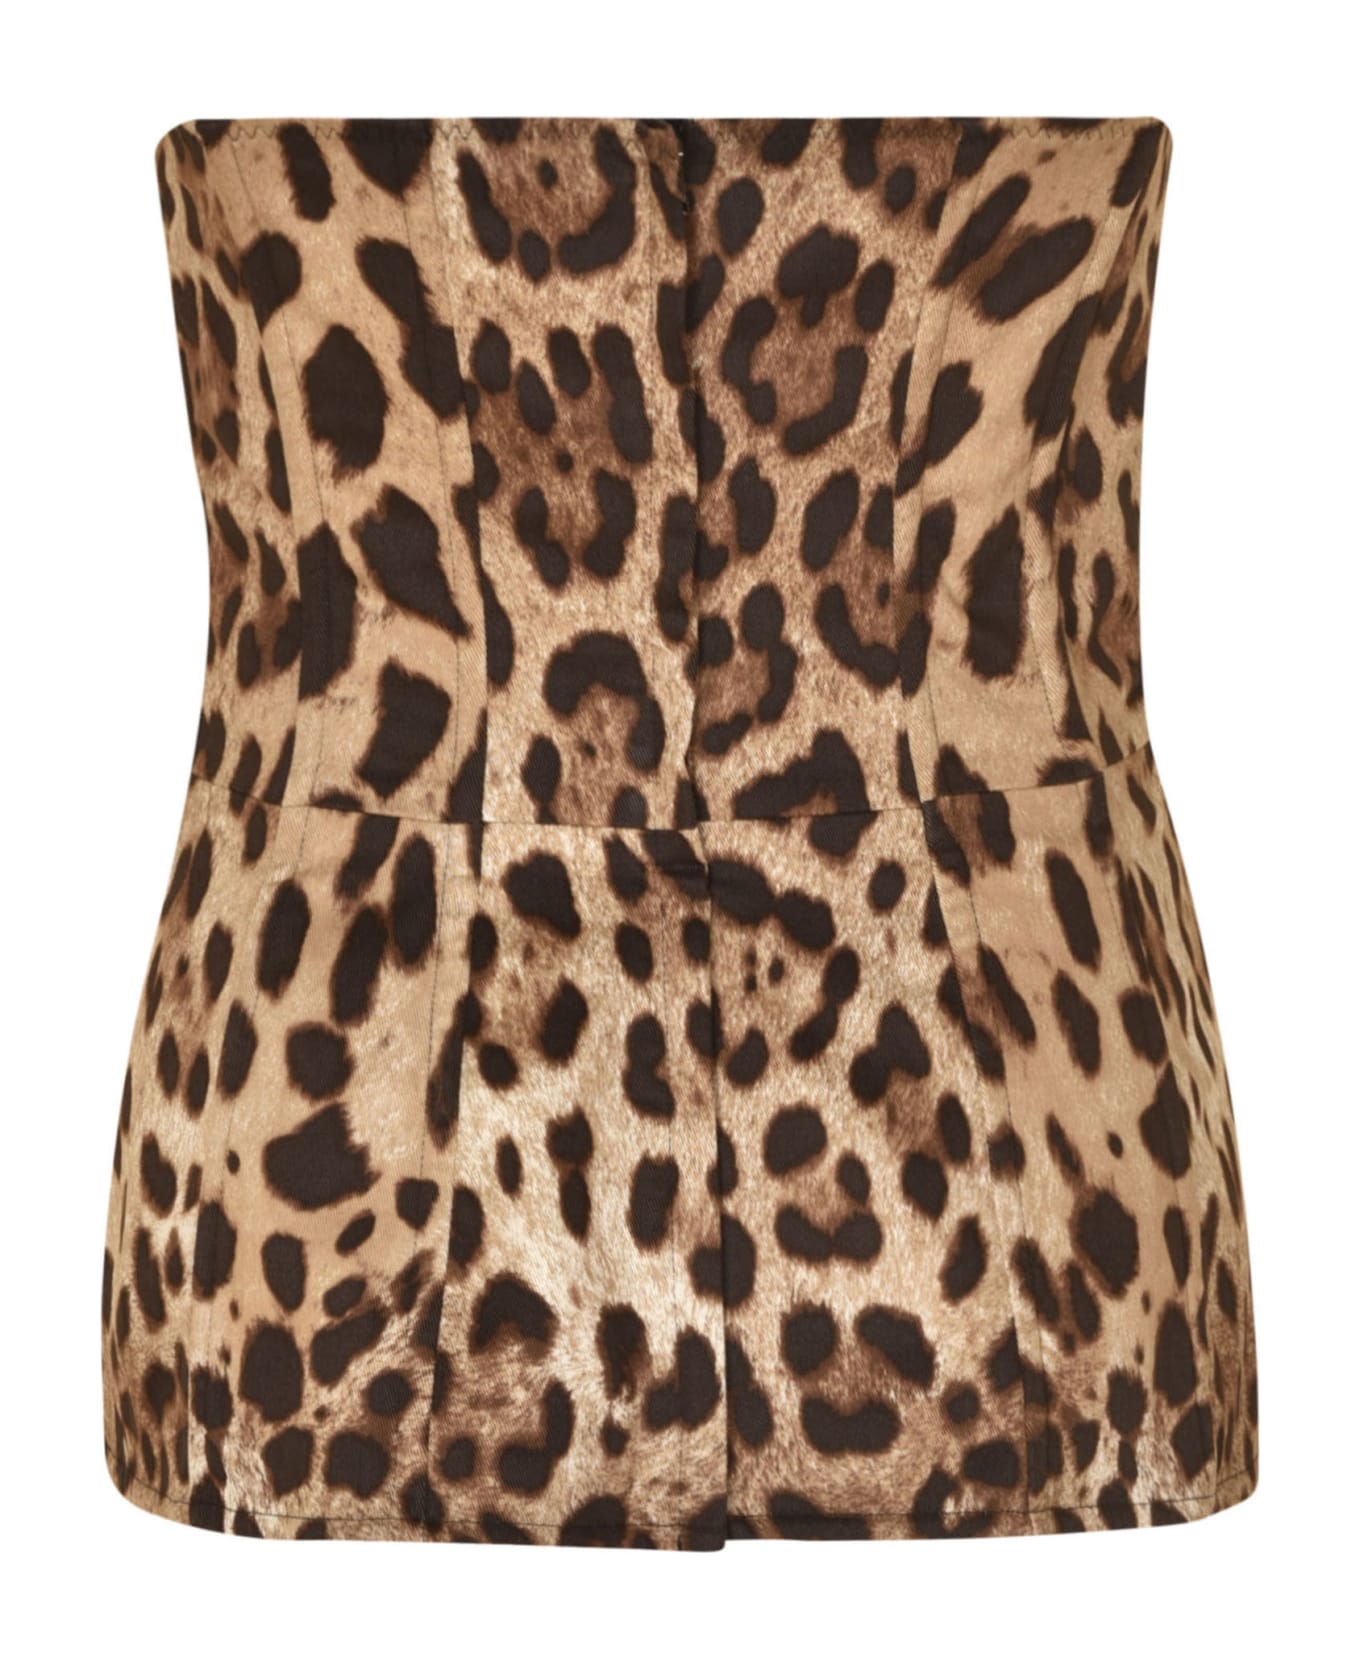 Dolce & Gabbana Leopard Print Top - leopard print